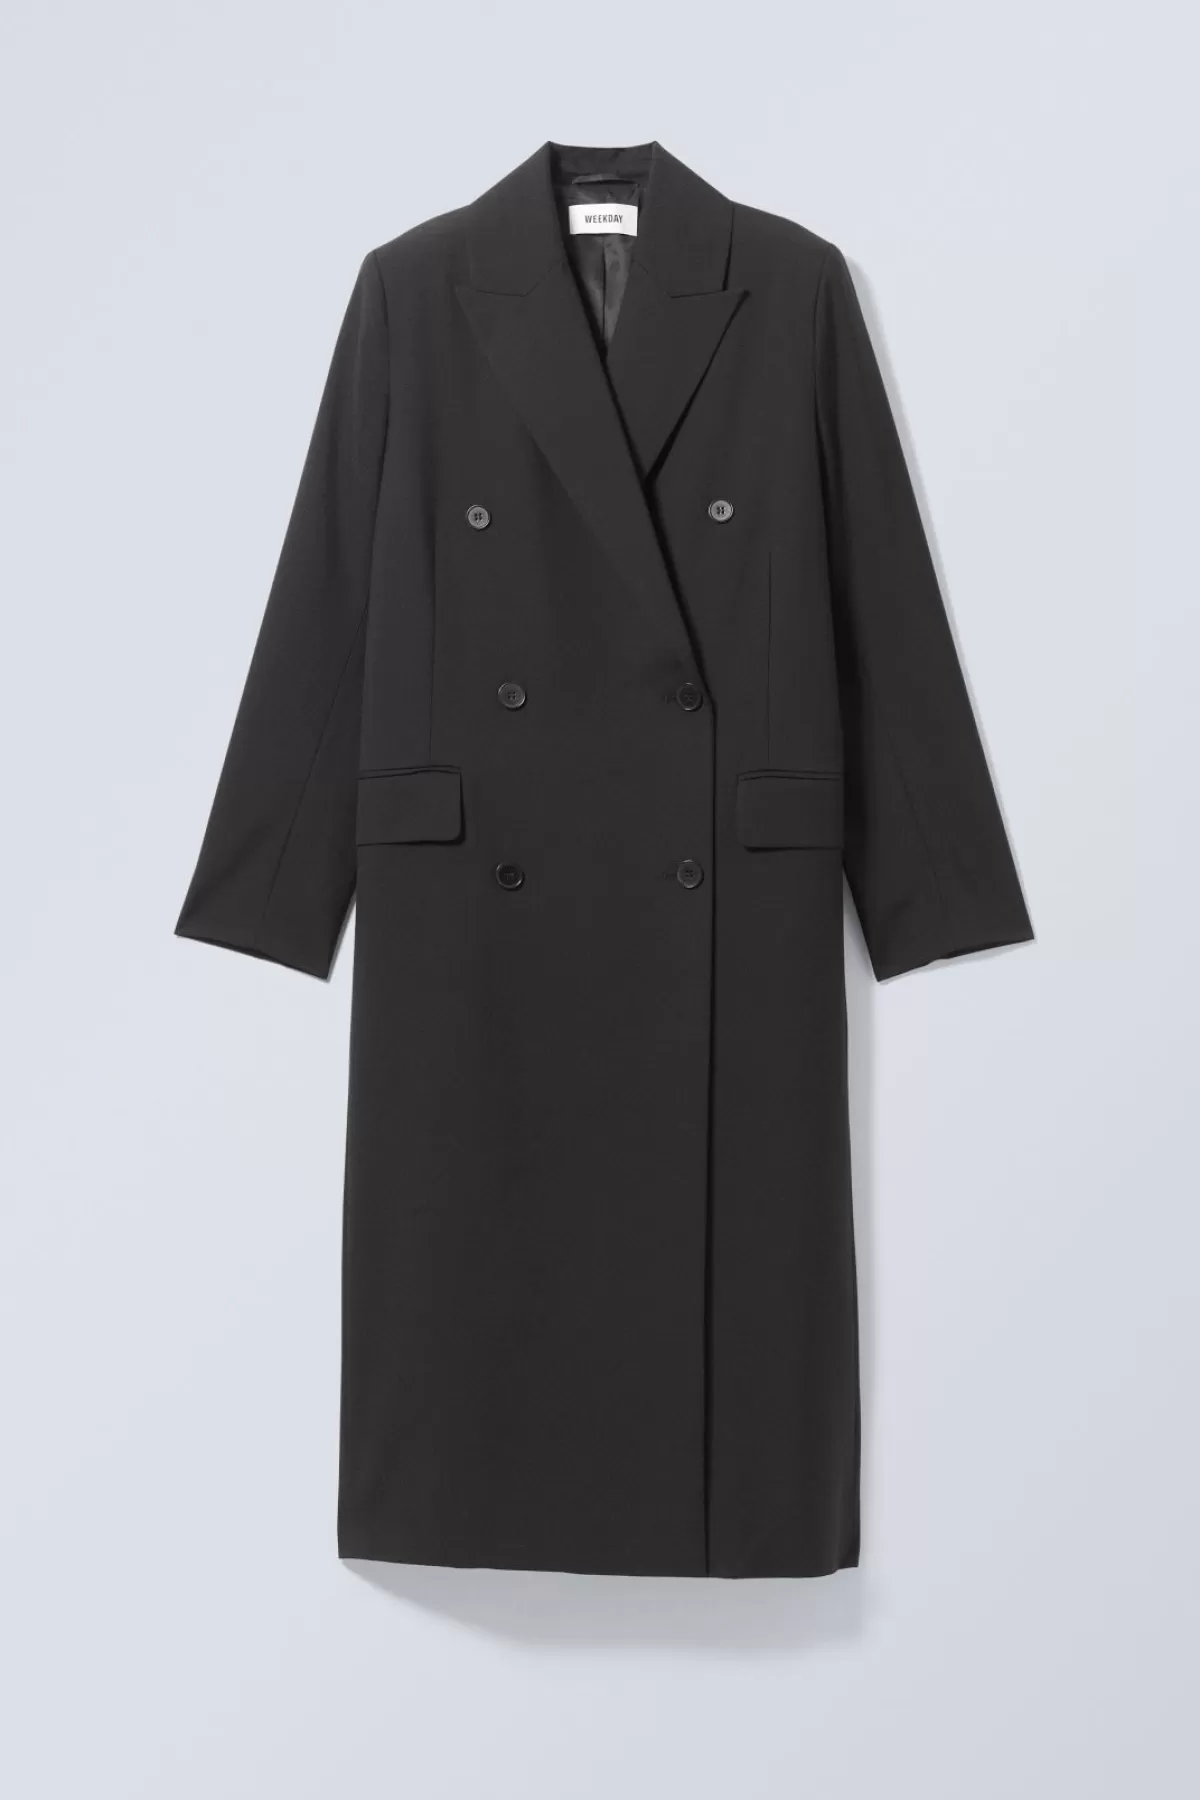 Weekday Navin Suiting Coat Black New